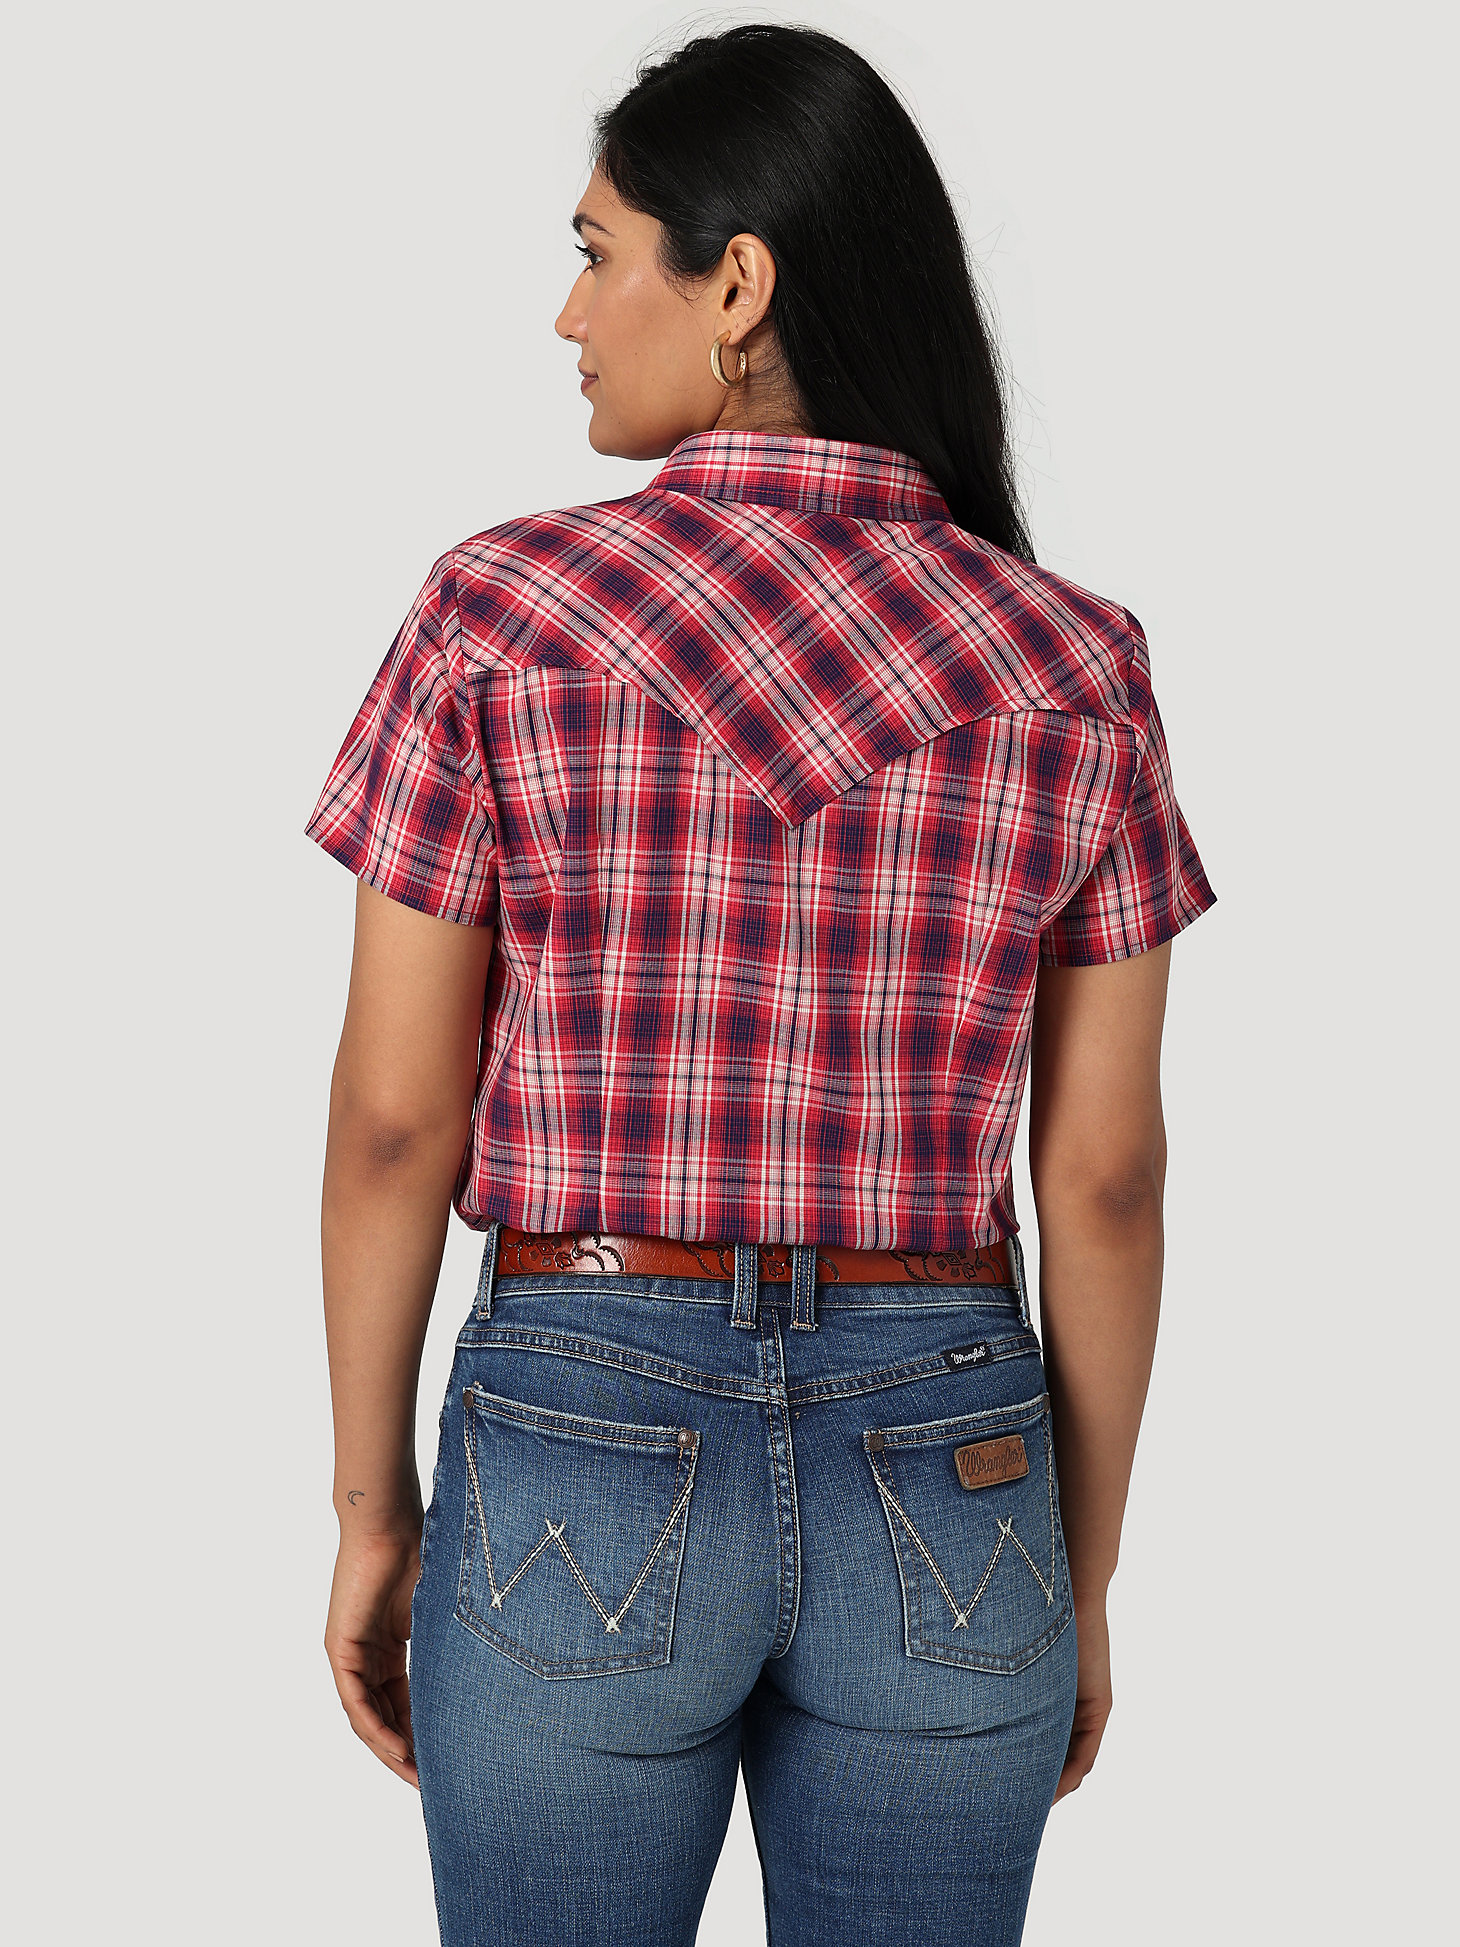 Women's Essential Short Sleeve Plaid Western Snap Top in Dark Red alternative view 1